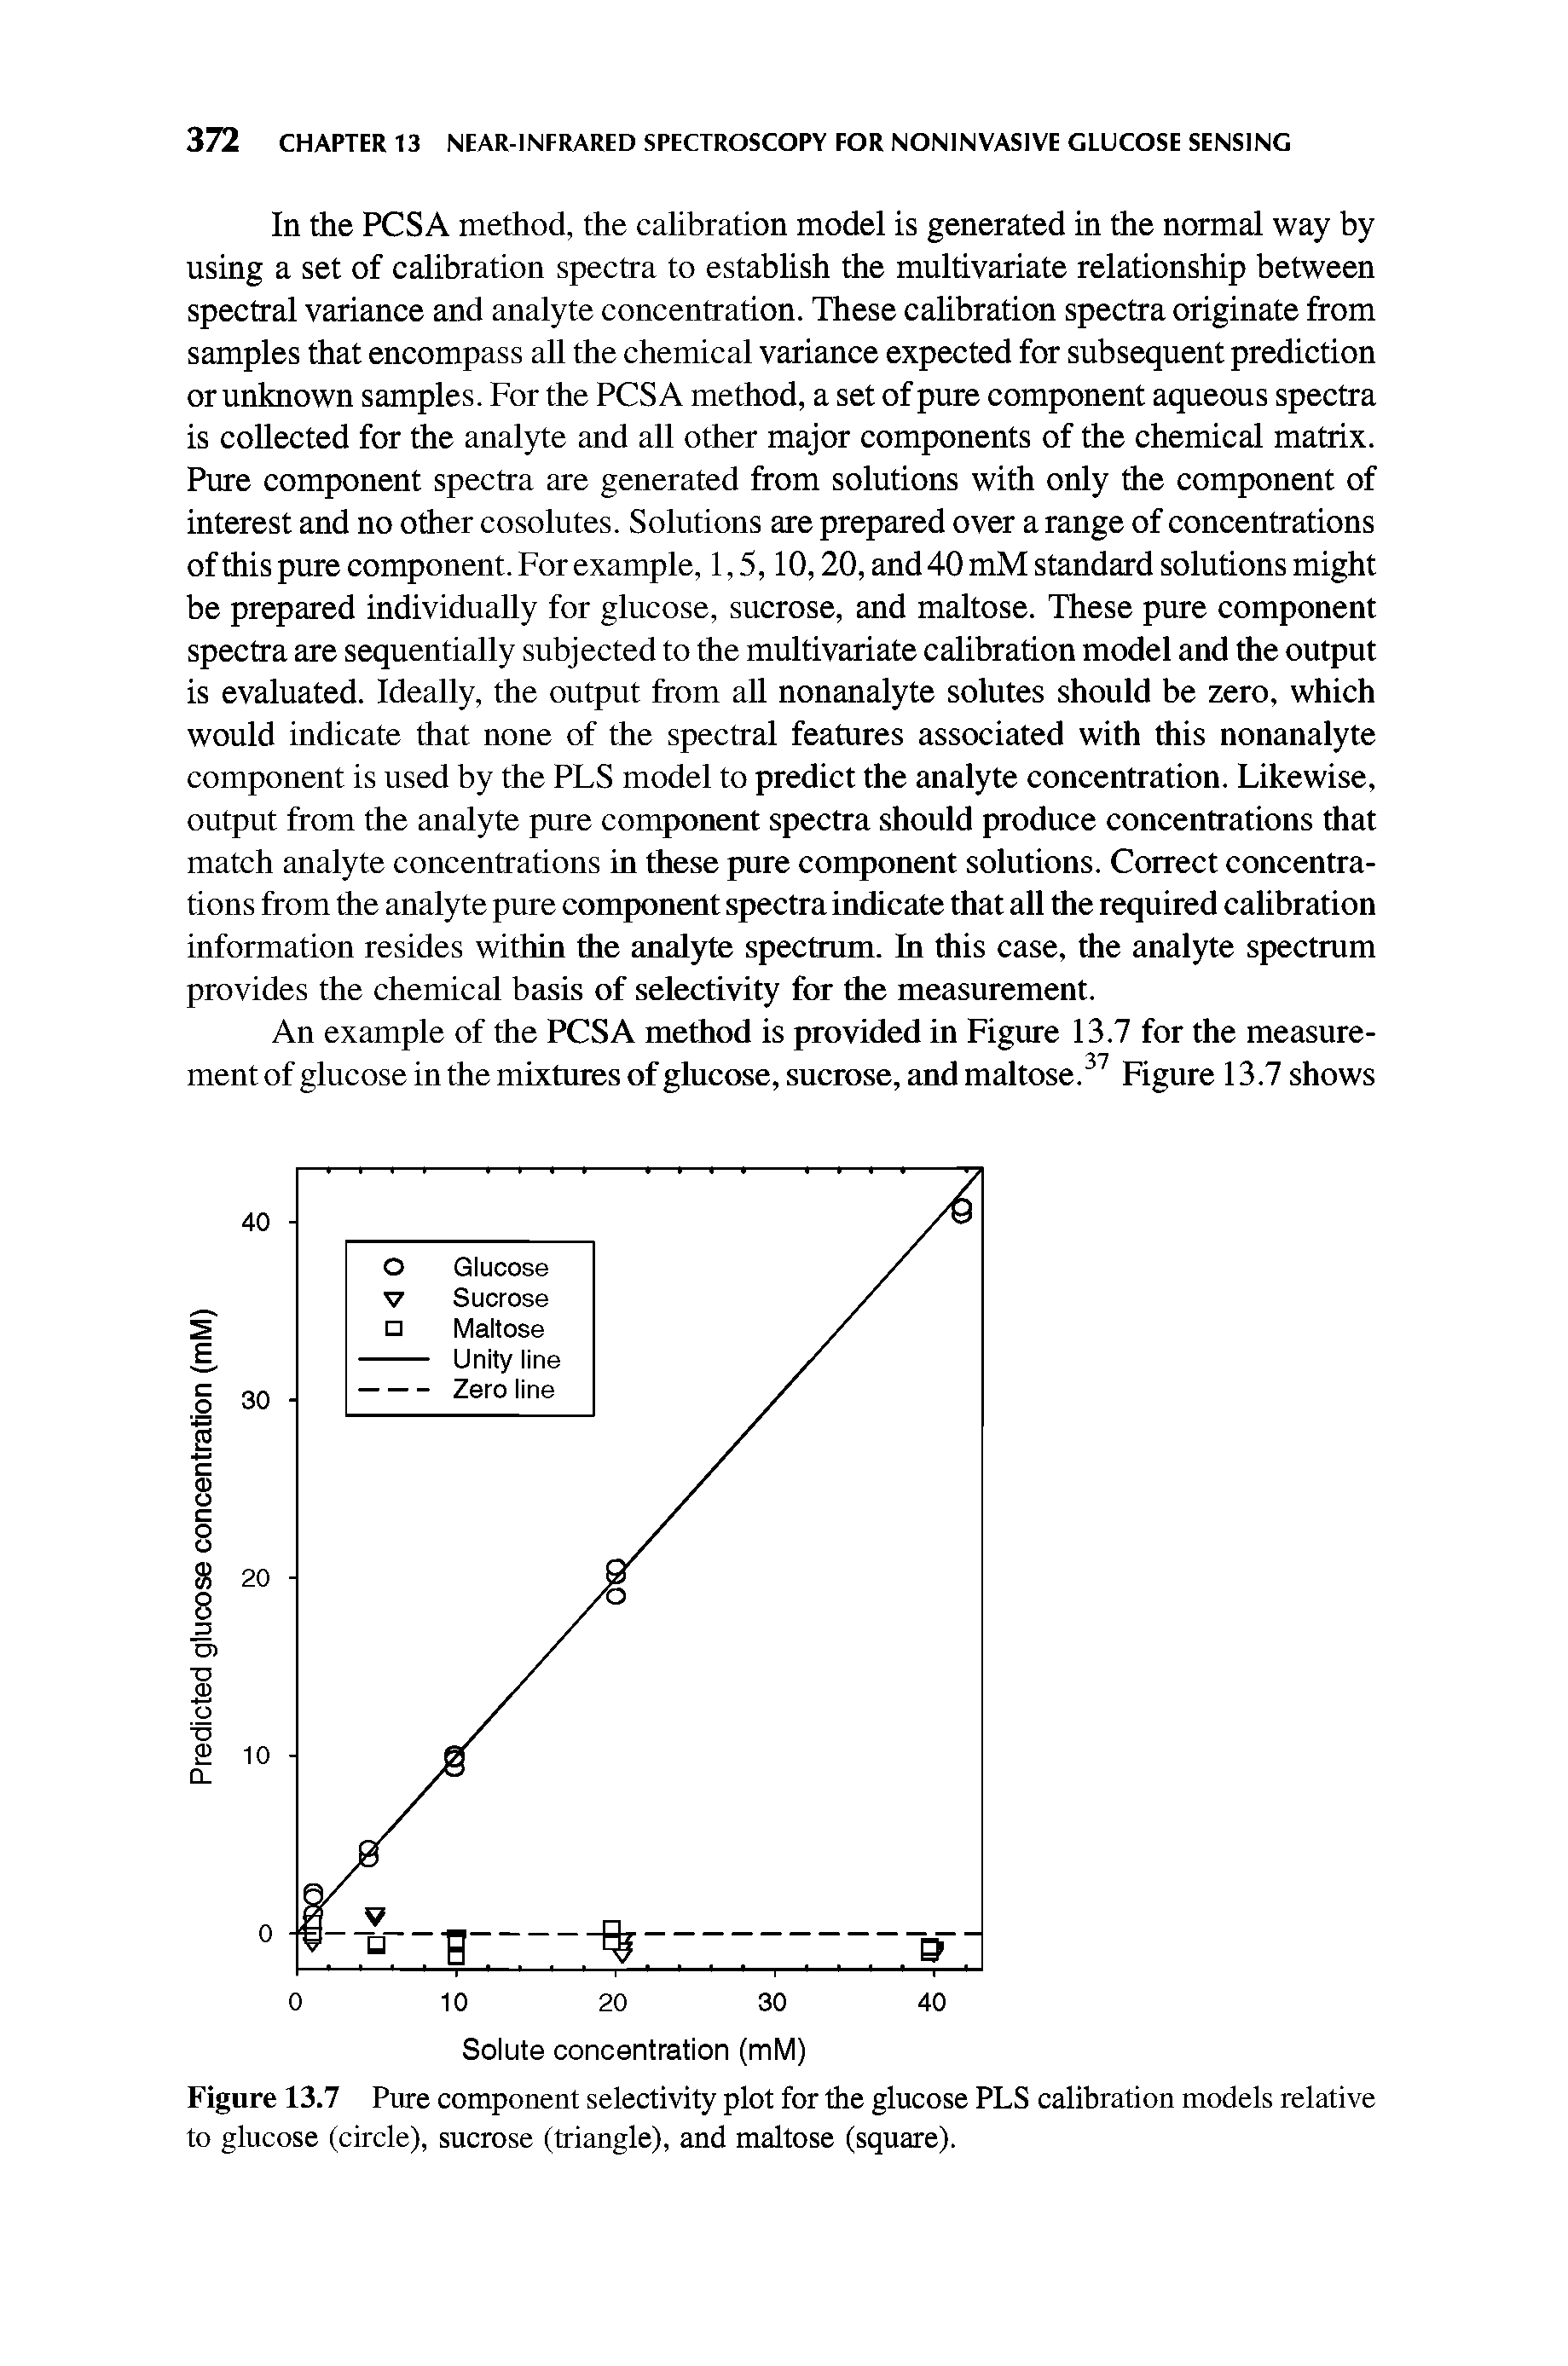 Figure 13.7 Pure component selectivity plot for the glucose PLS calibration models relative to glucose (circle), sucrose (triangle), and maltose (square).